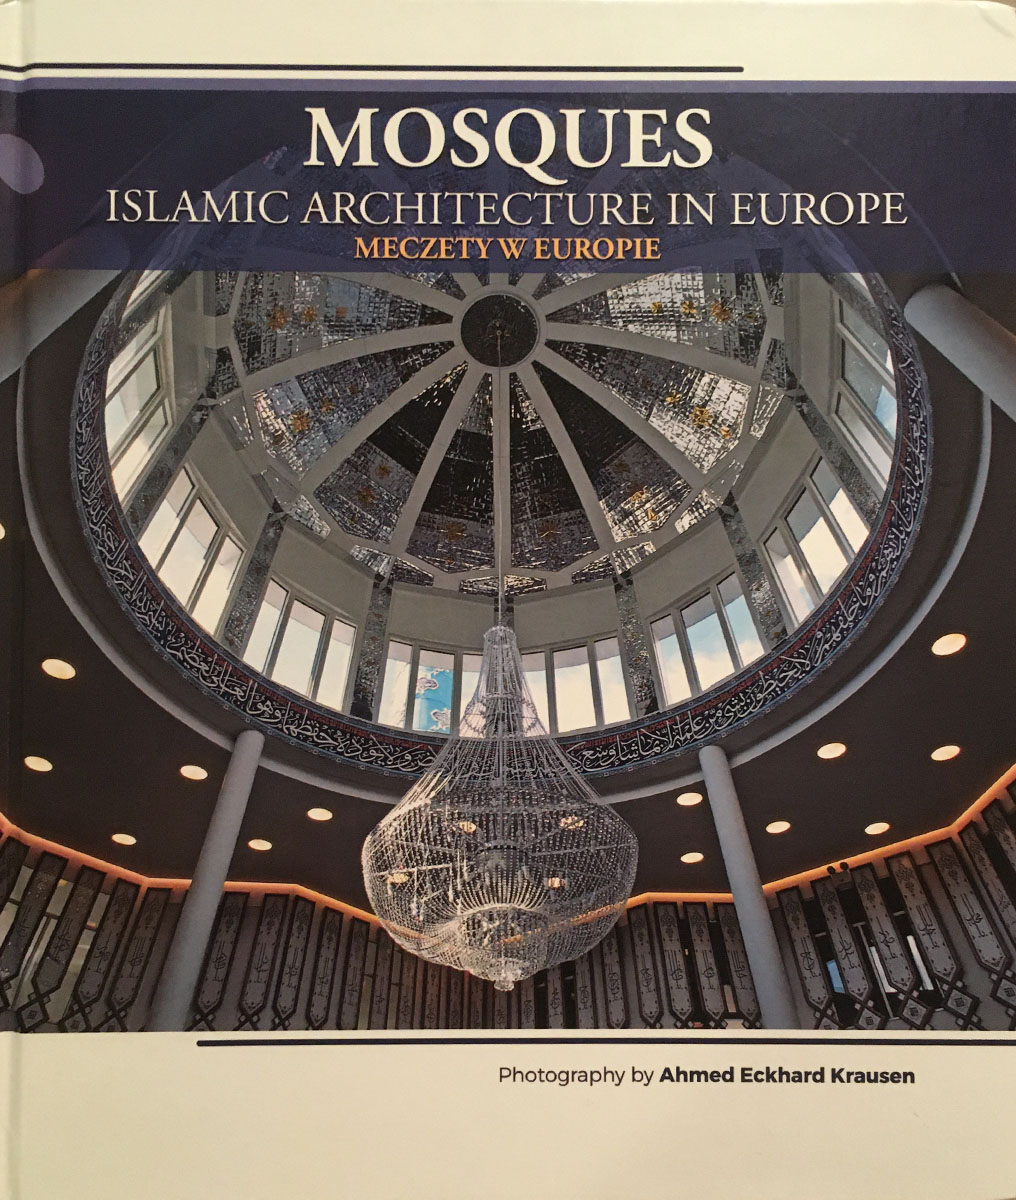 islamic architecture mosque